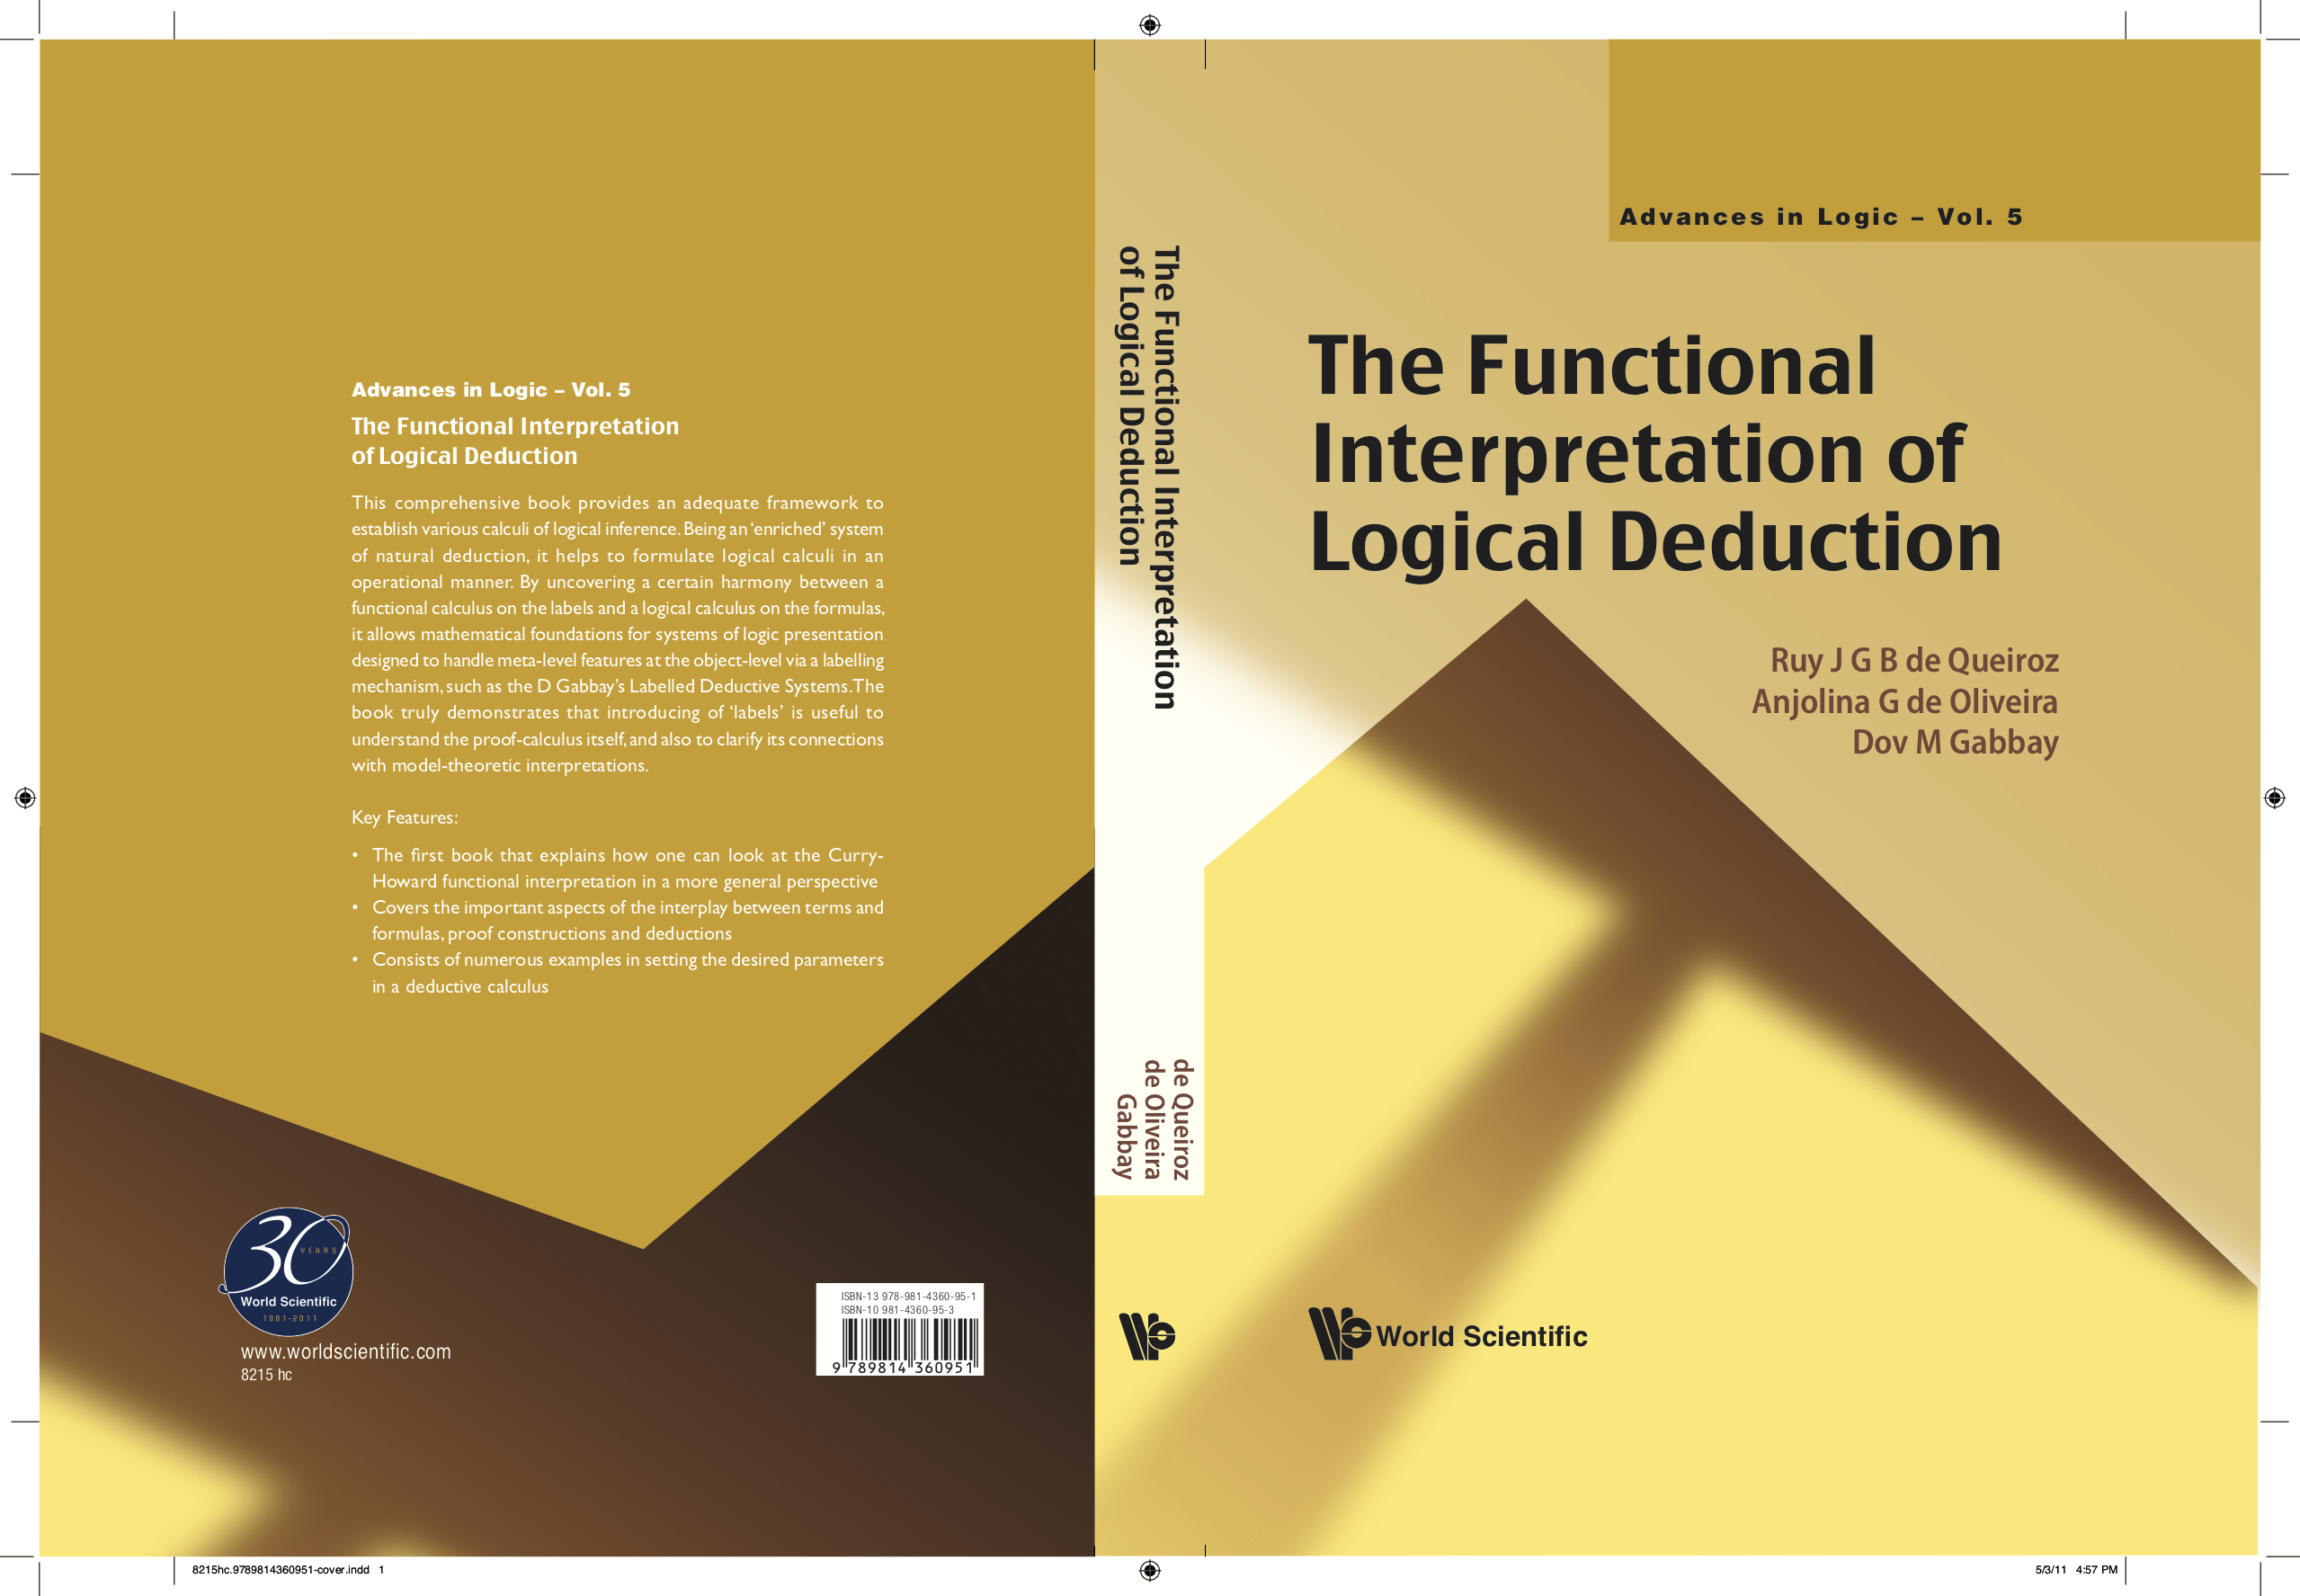 The Functional Interpretation of Logical Deduction